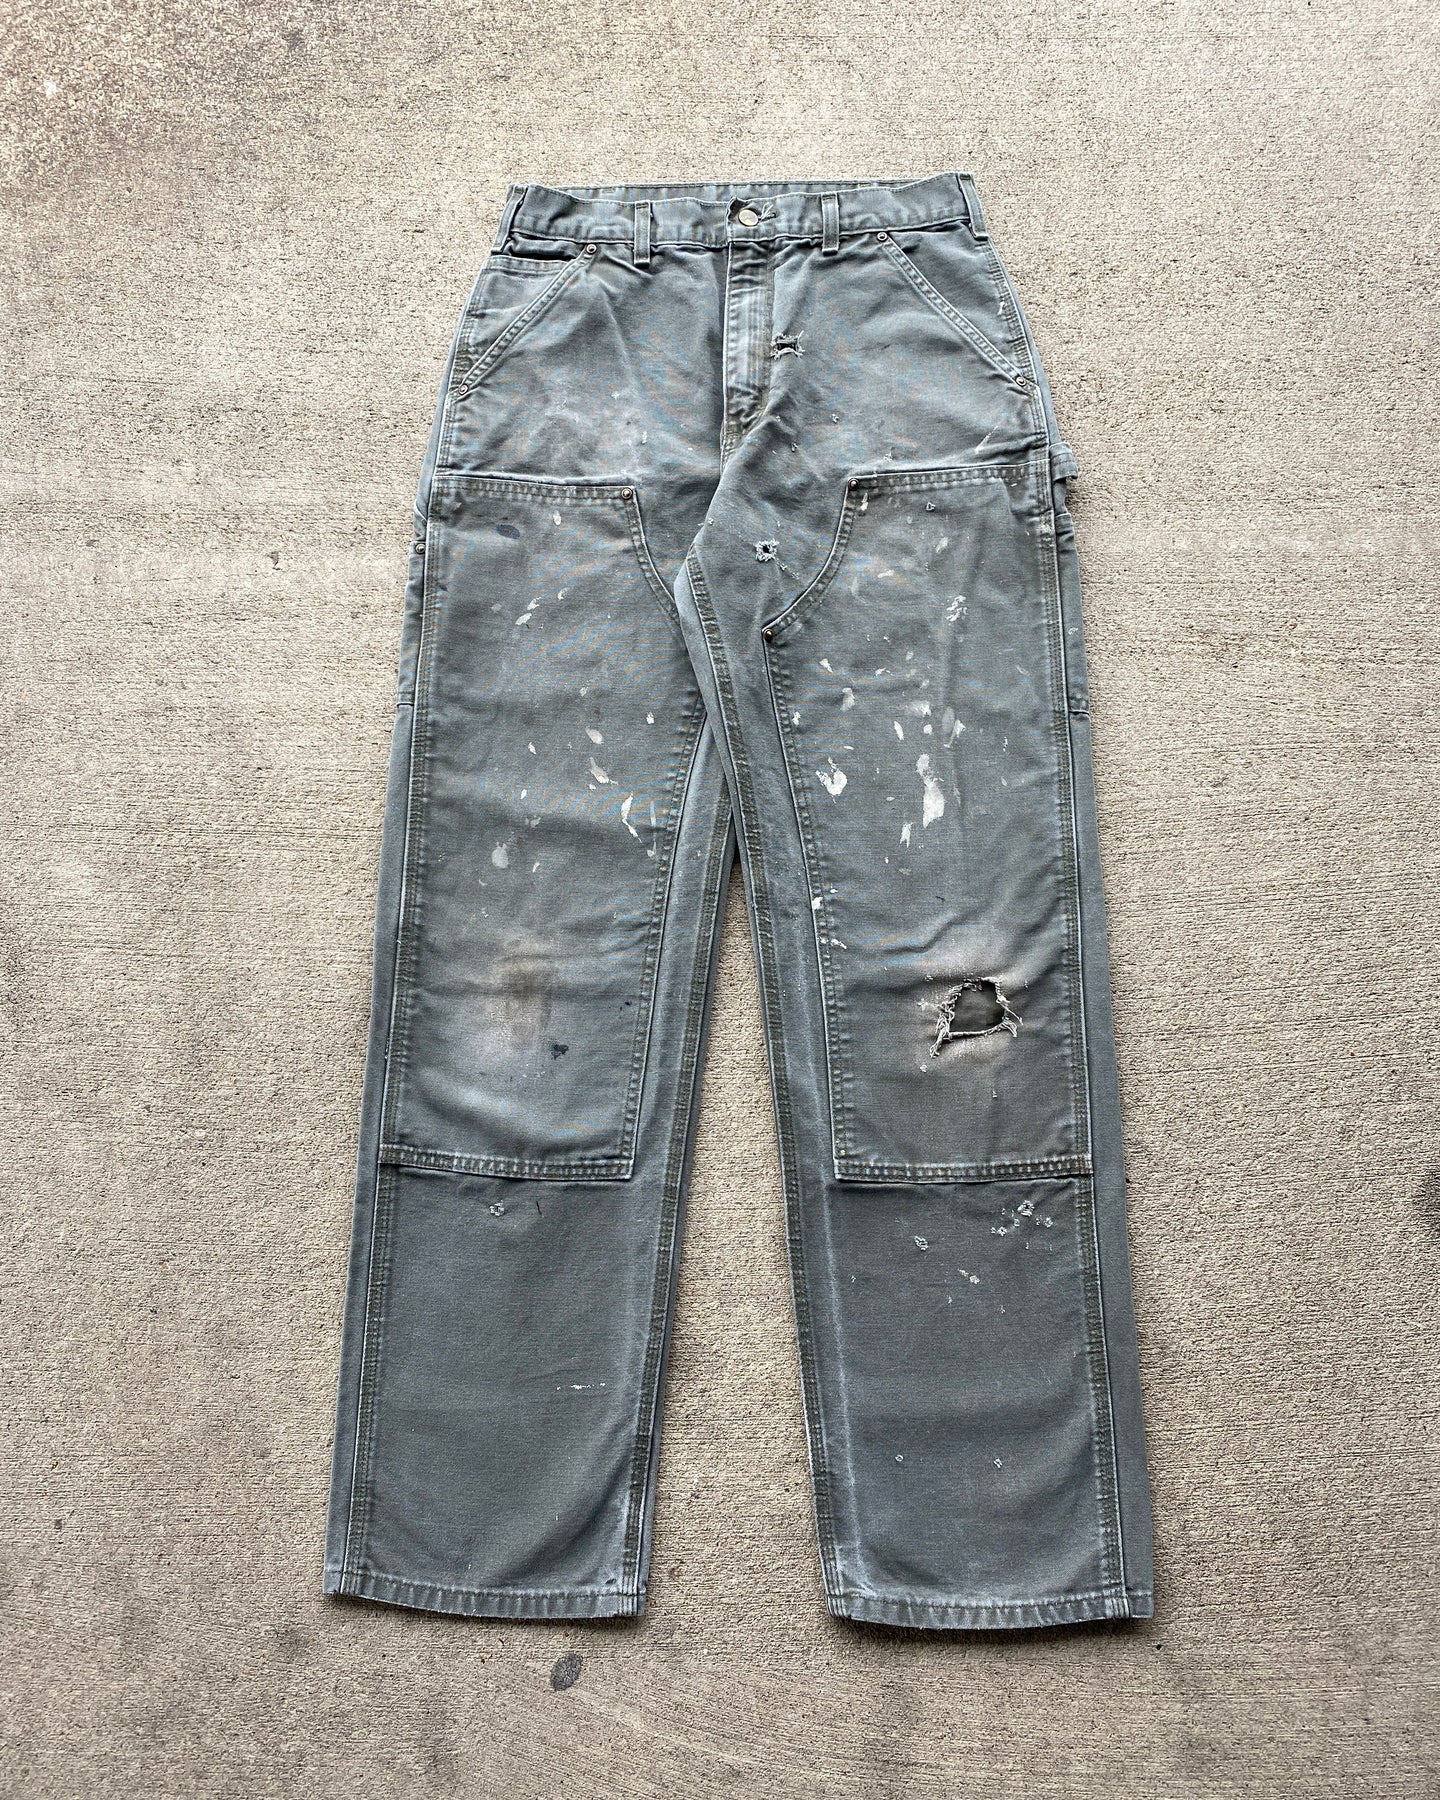 1990s Carhartt Painter's Moss Green Double Knee Pants - Size 32 x 34